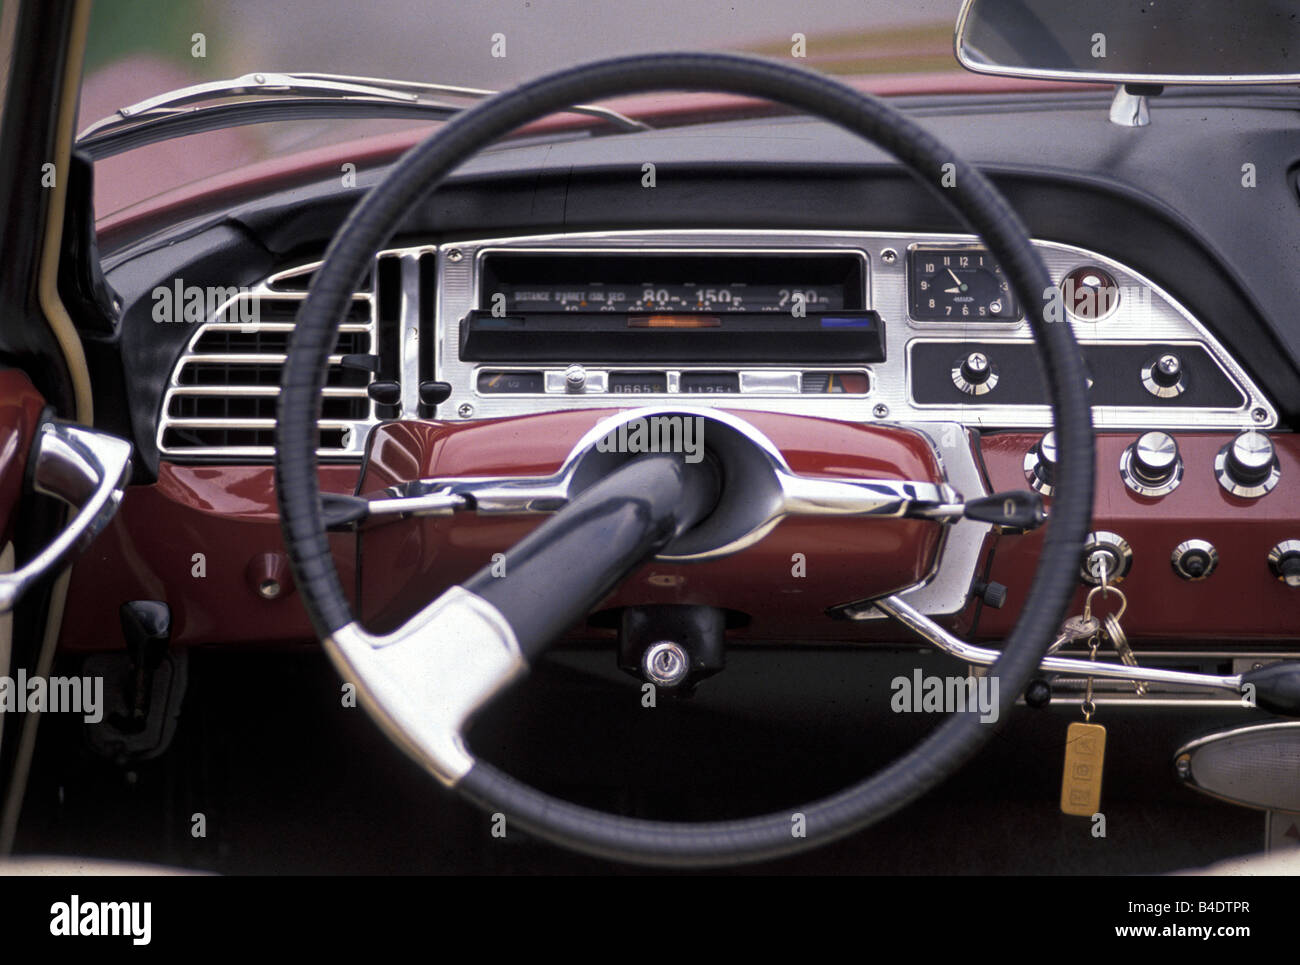 https://c8.alamy.com/comp/B4DTPR/car-citroen-ds-convertible-model-year-1961-1965-vintage-approx-sixties-B4DTPR.jpg